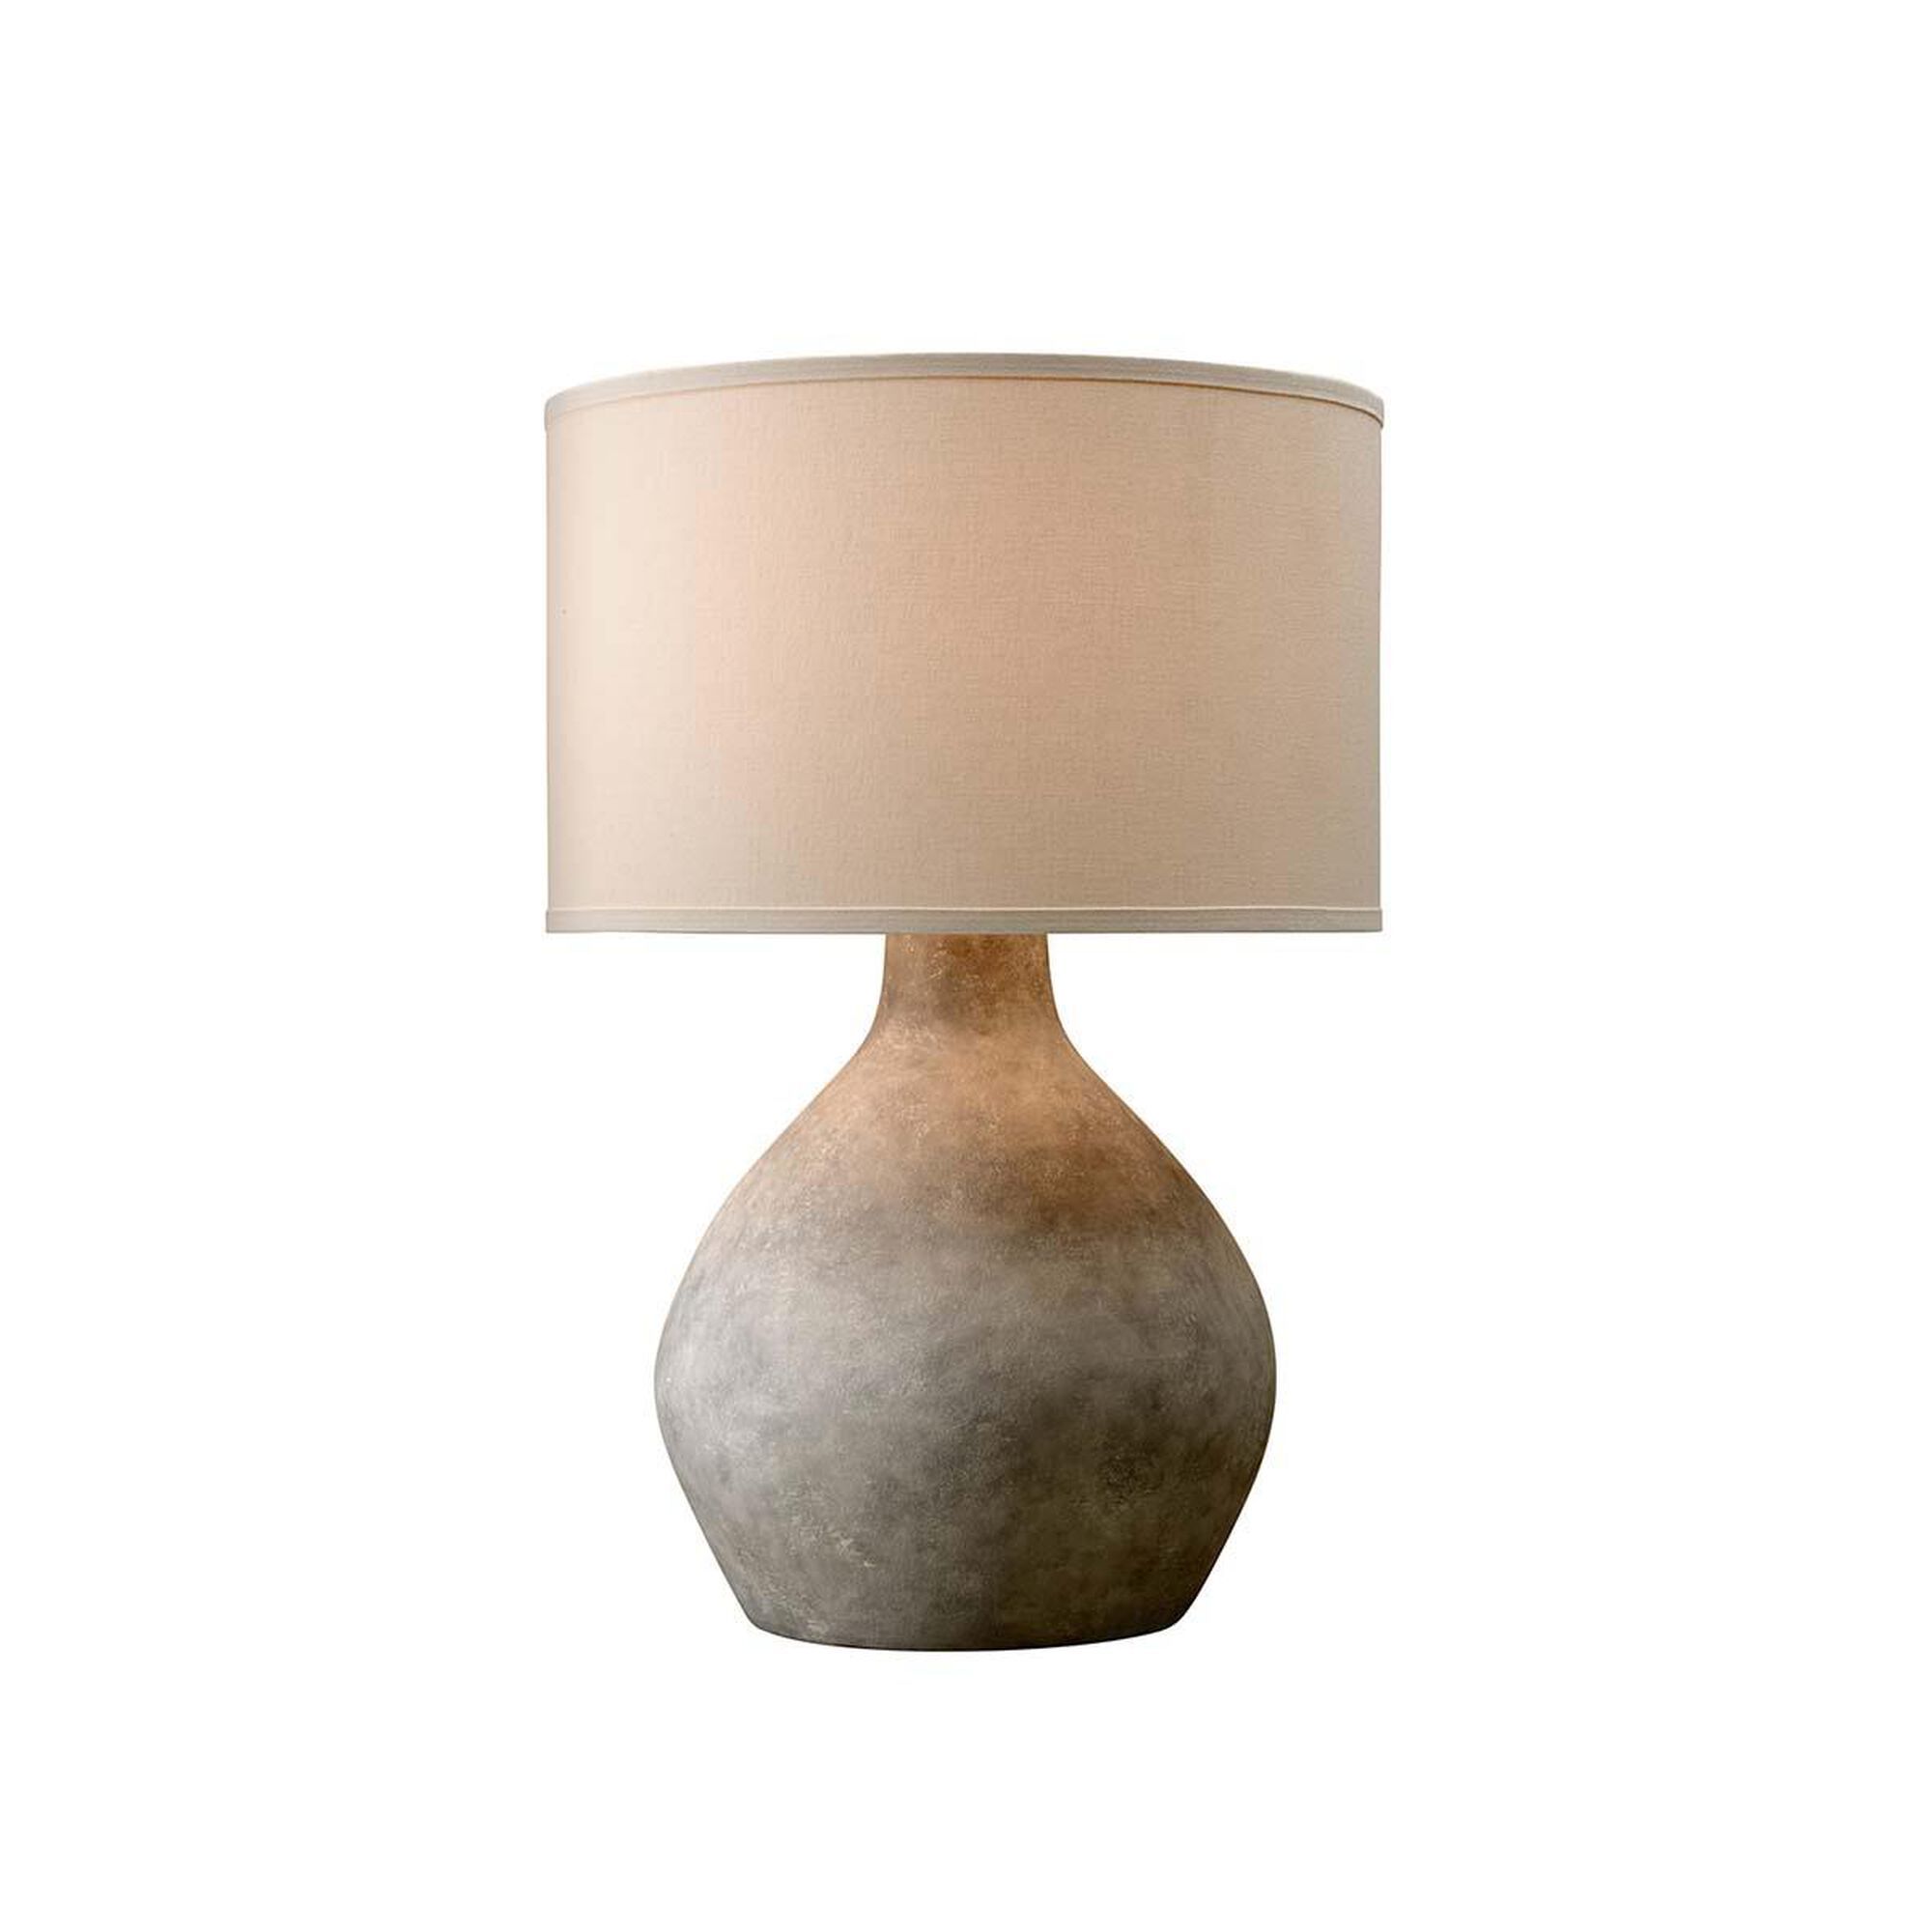 Zen 26 Inch Table Lamp by Troy Lighting | Capitol Lighting 1800lighting.com